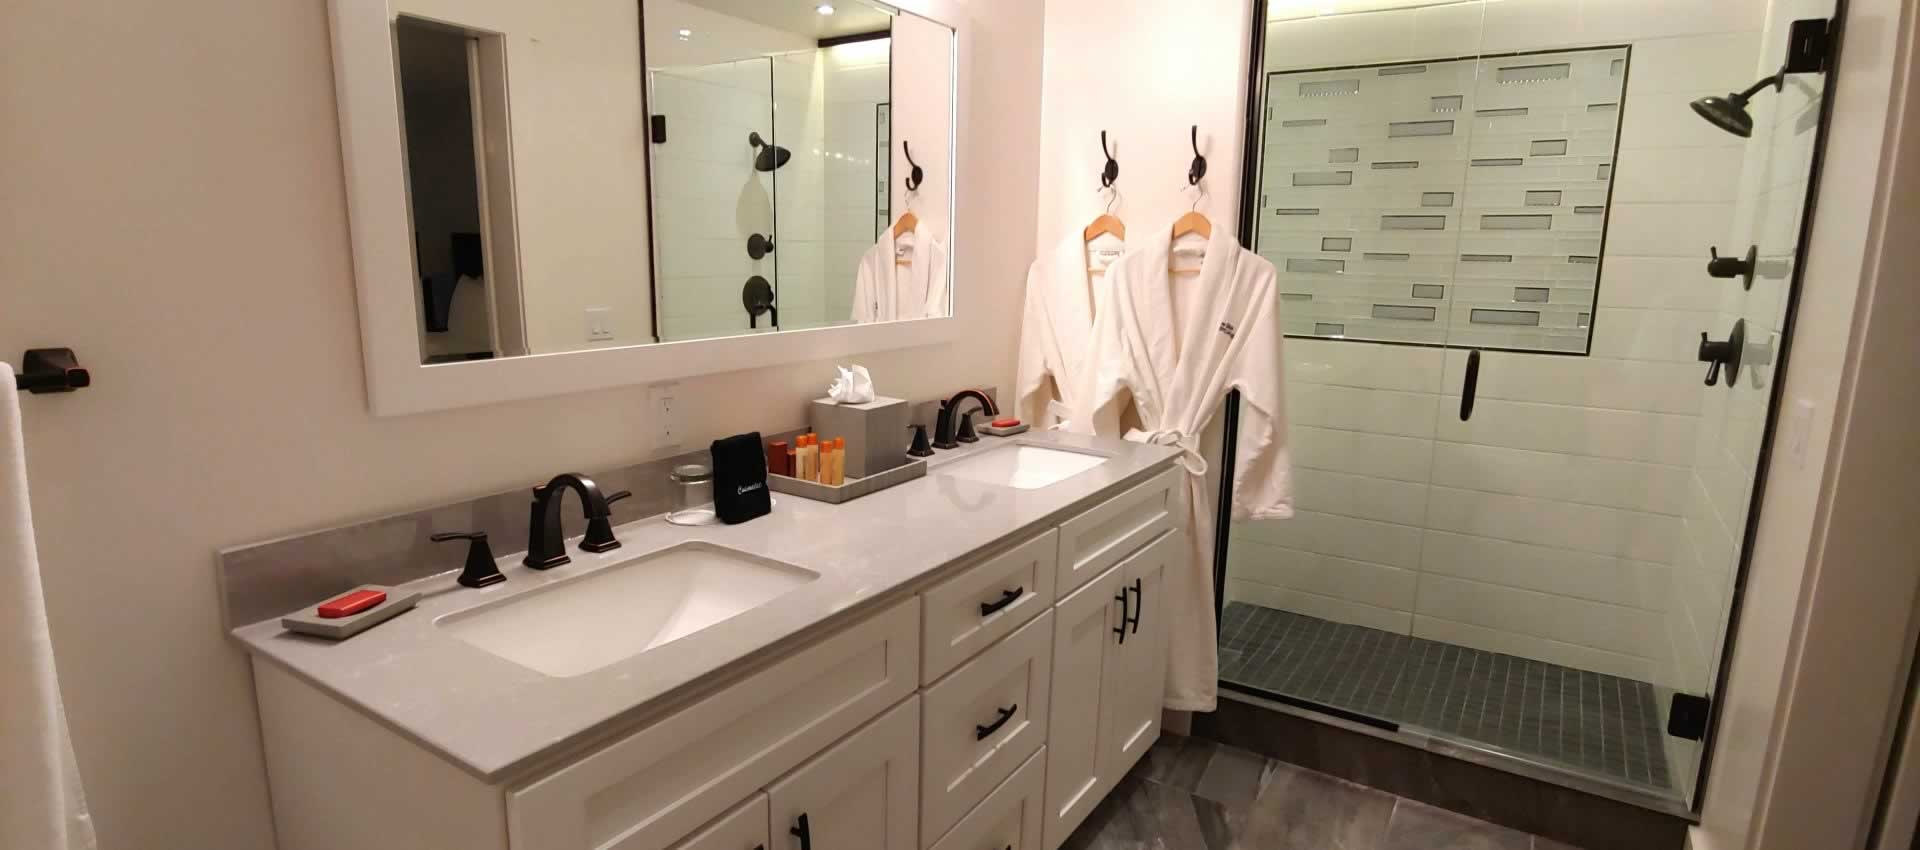 Suite Getaway Bathroom vanity with shower and robes